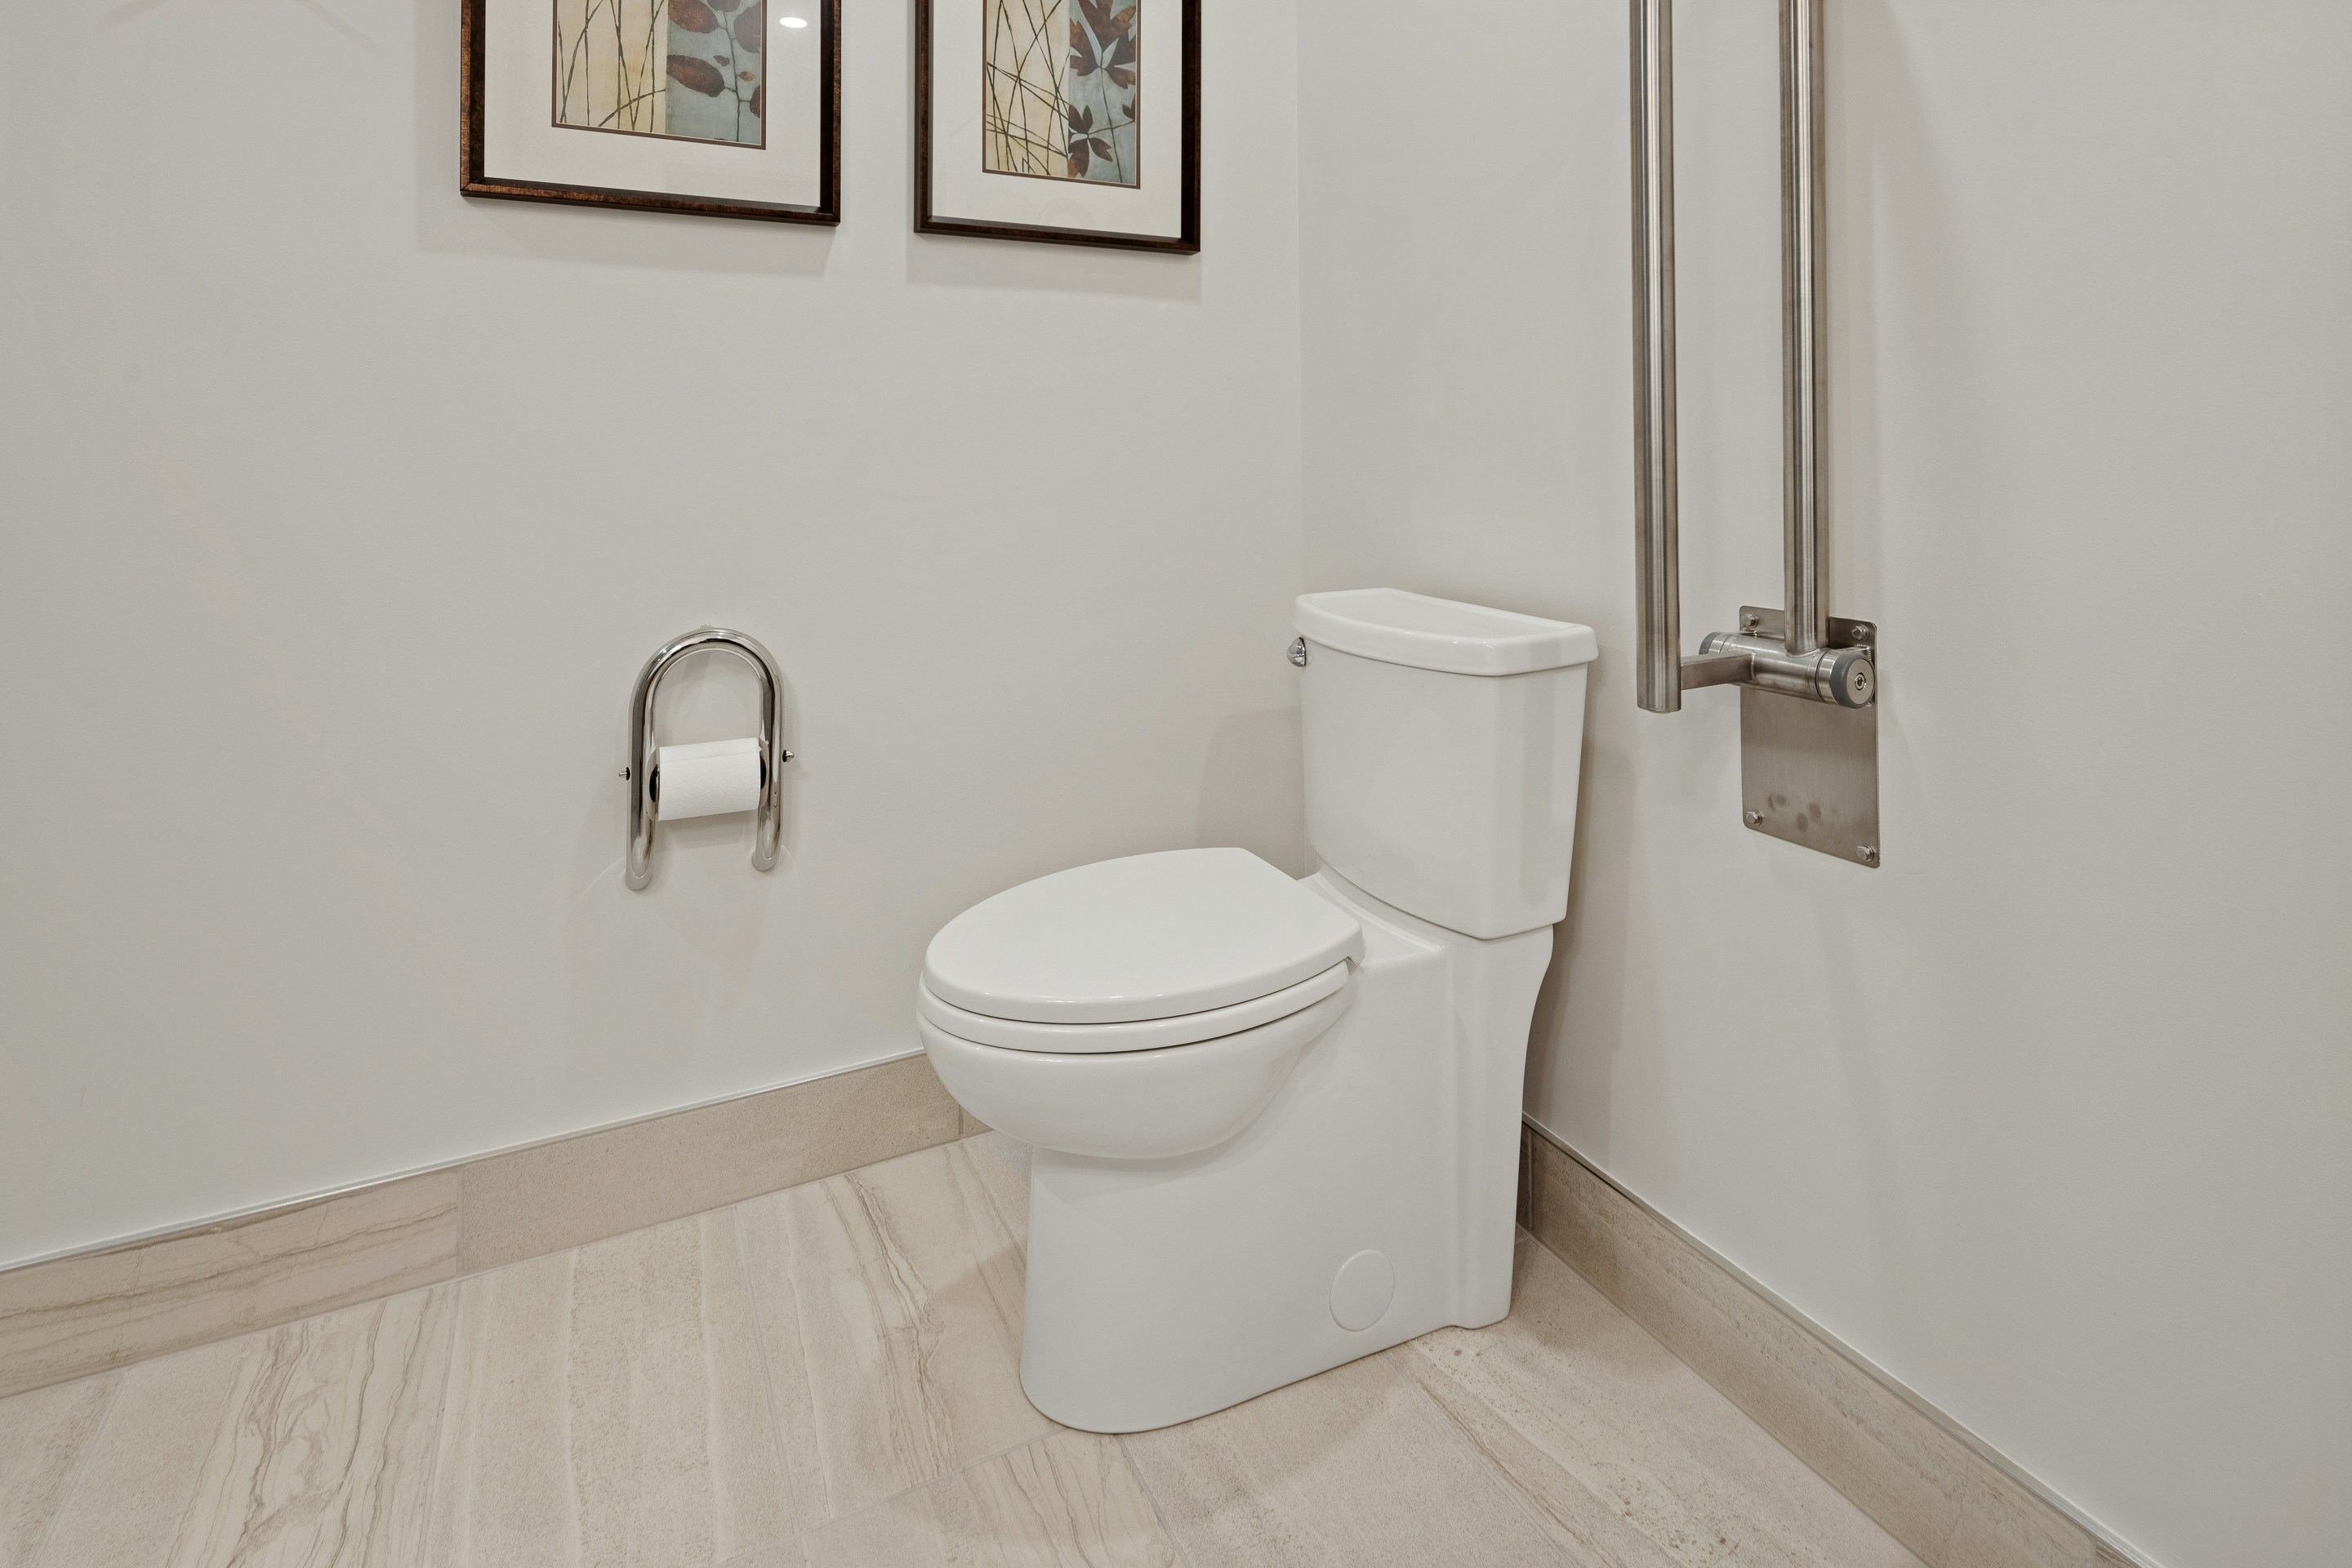 toilet with bidet in modern bathroom